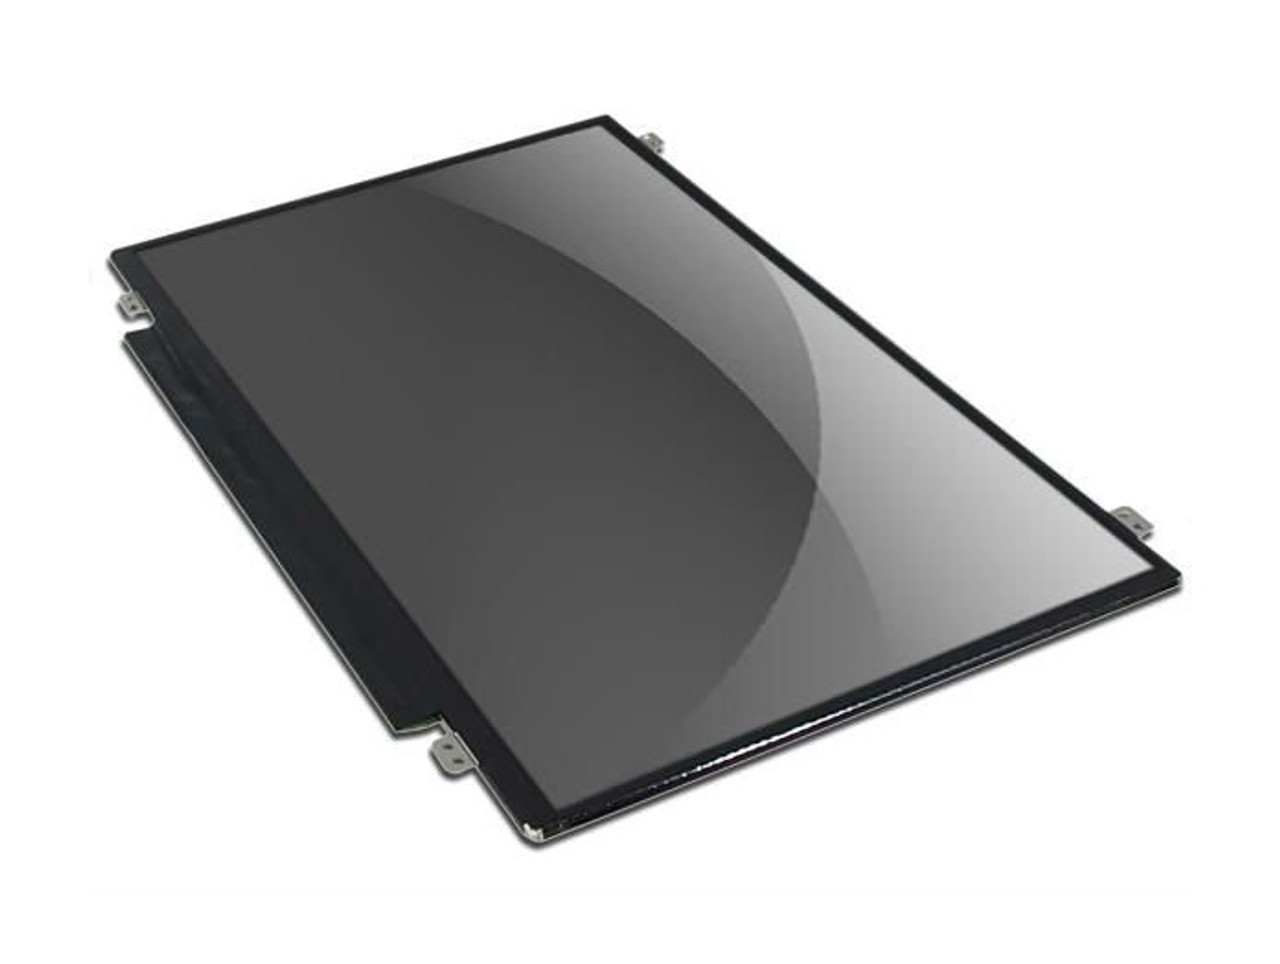 CC280 - Dell 1707FP 17-inch Flat Panel LCD Monitor (Black)